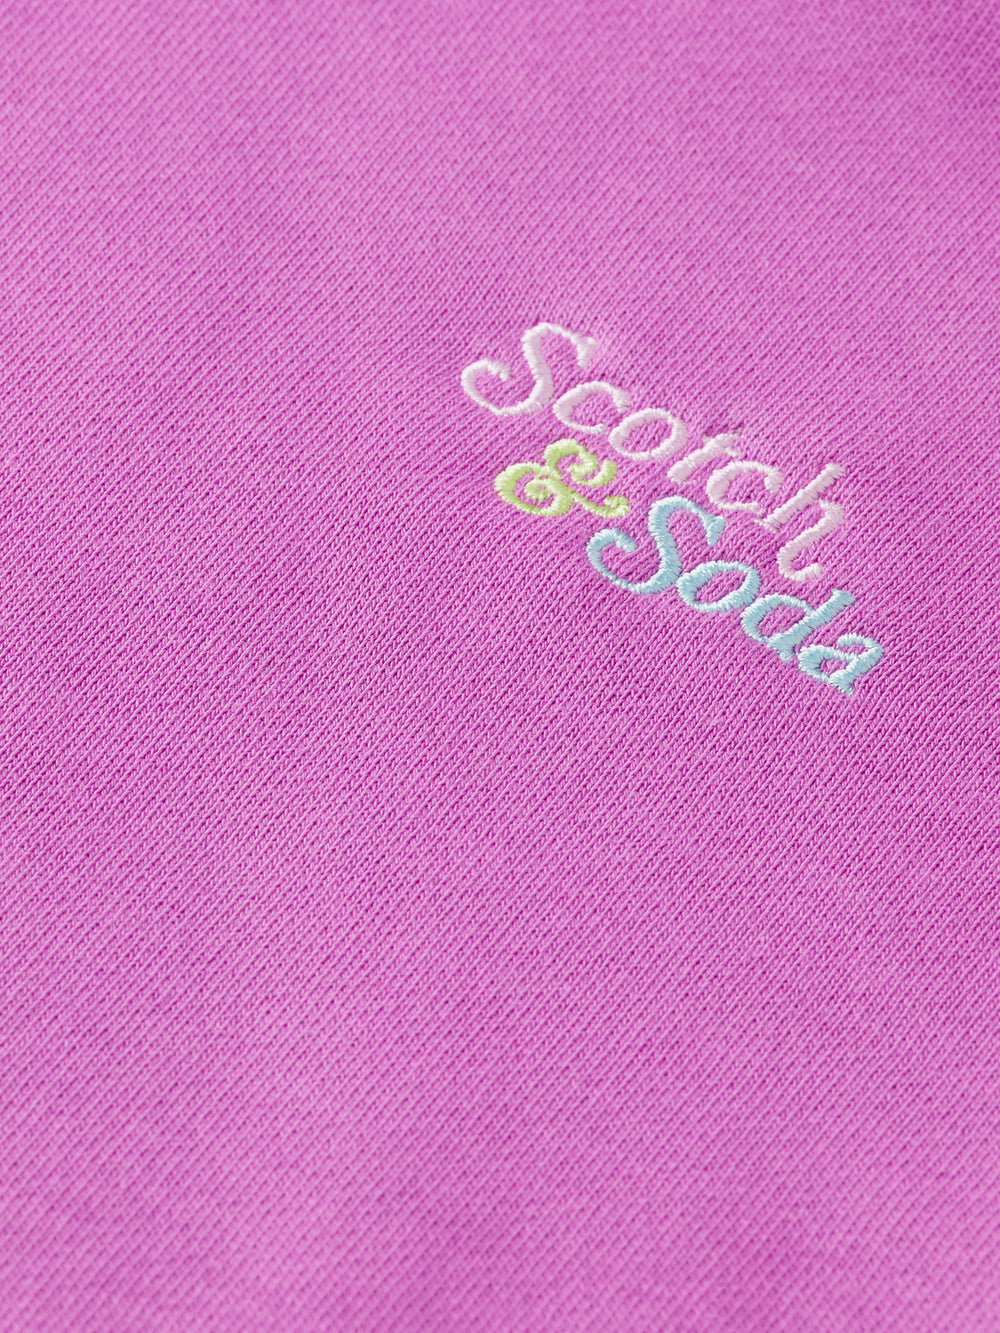 Kids - Organic cotton hoodie - Scotch & Soda AU